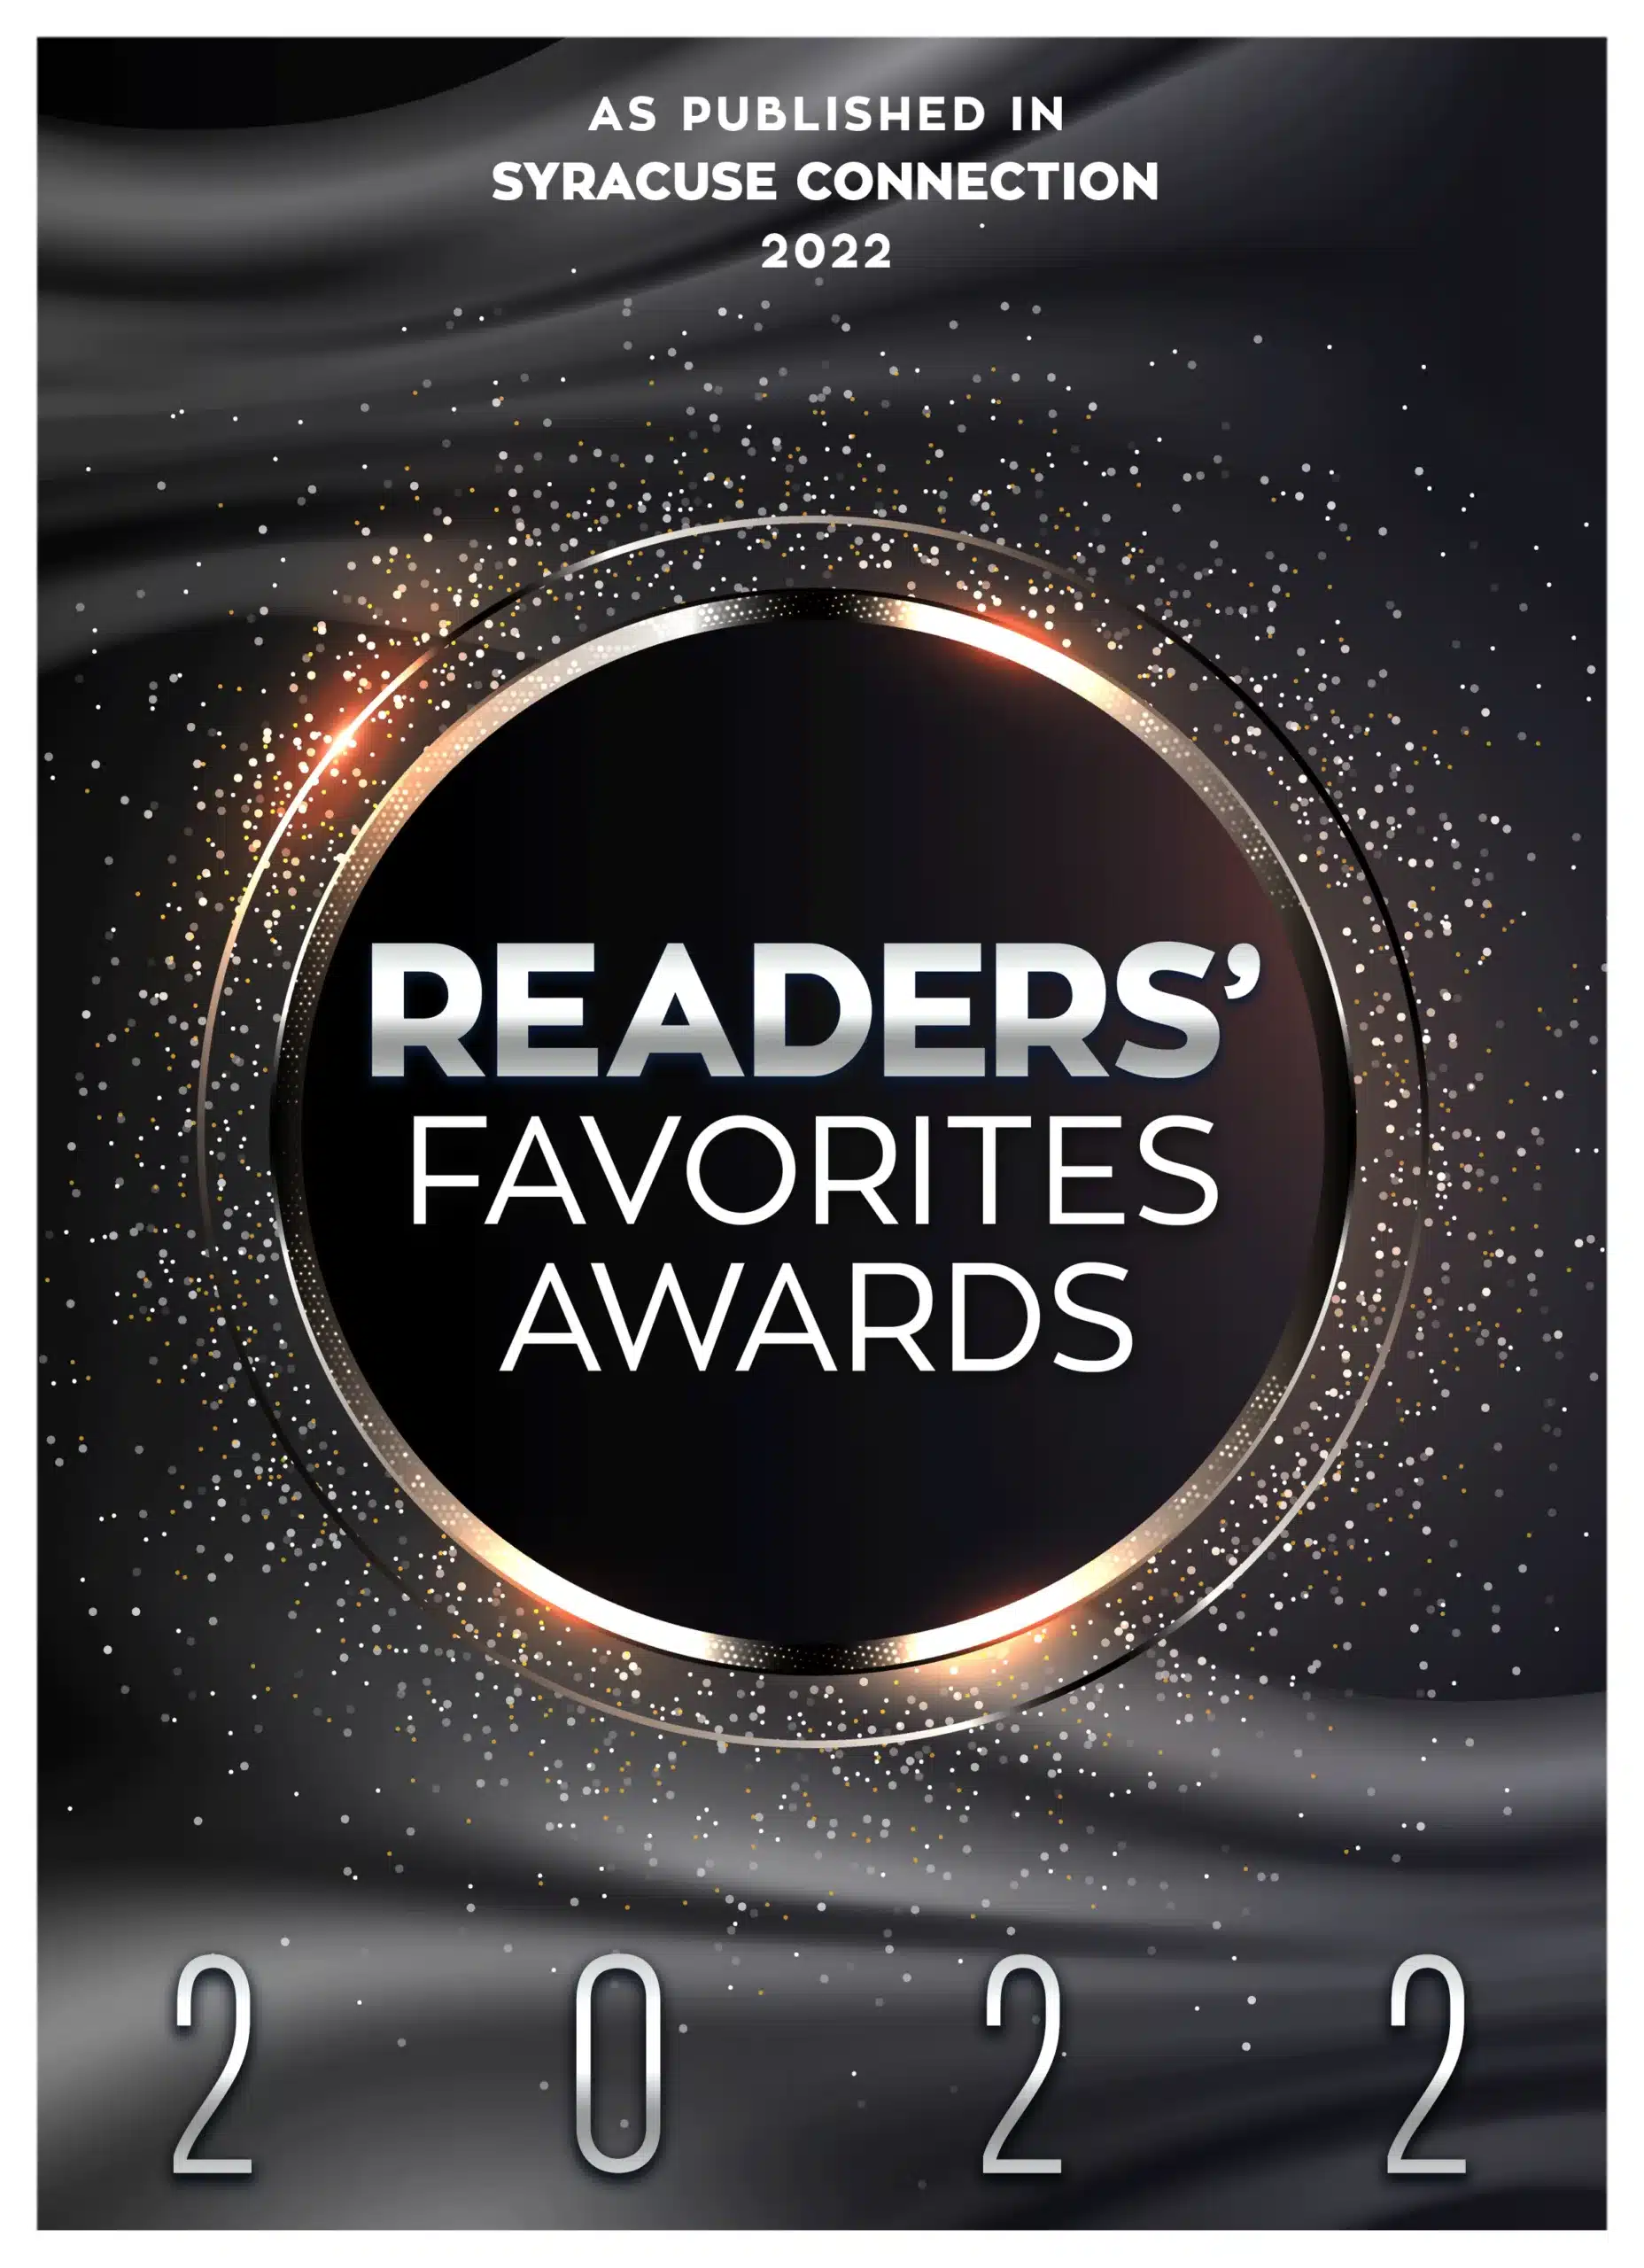 Syracuse award Readers' Favorites 2022